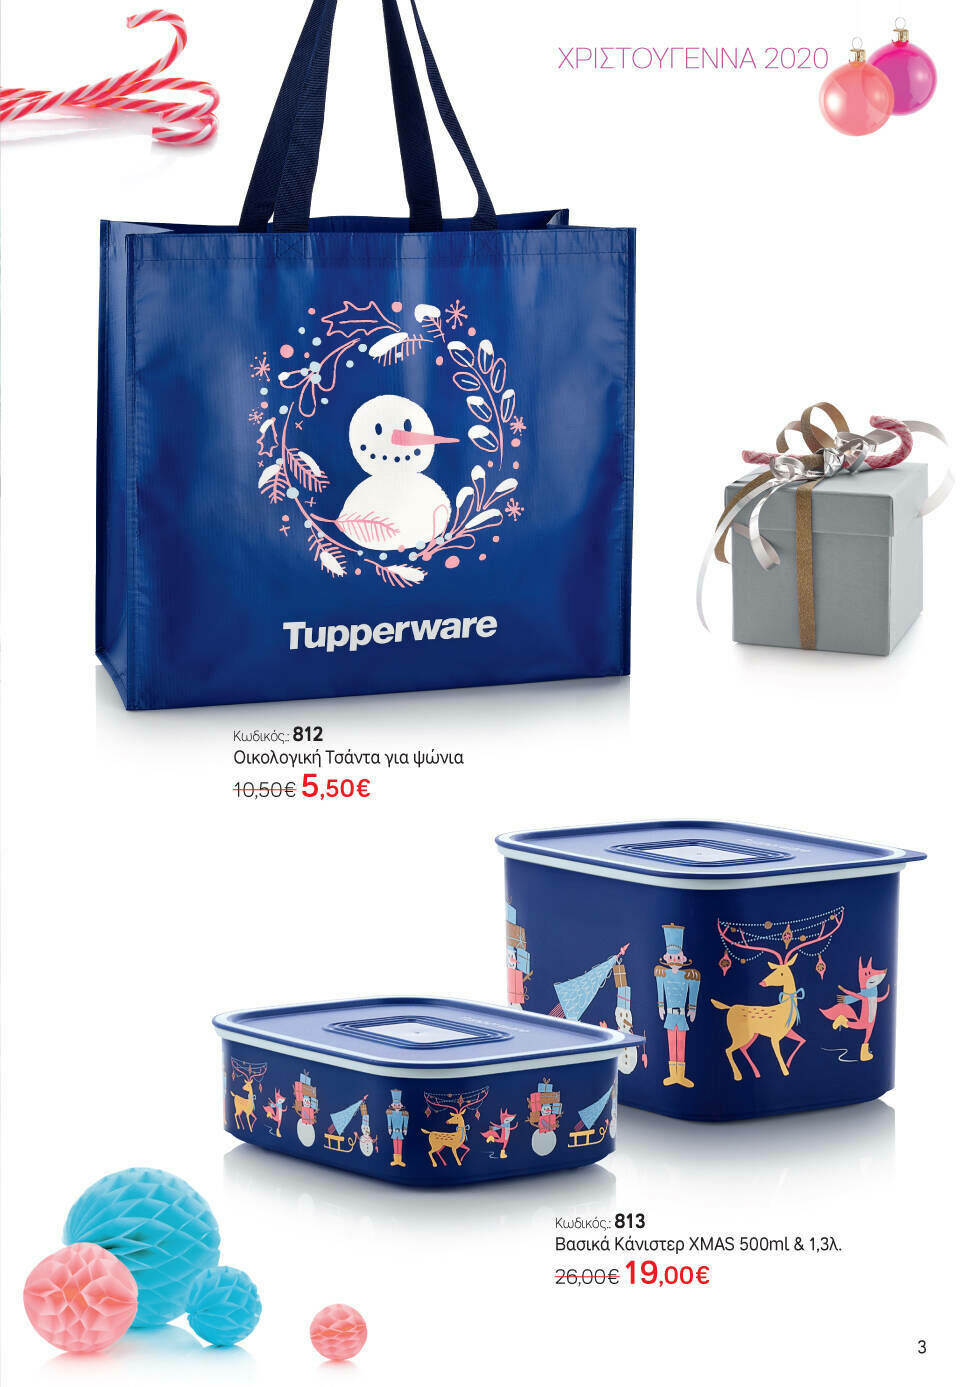  Tupperware "Χριστούγεννα 2020" σελ 3